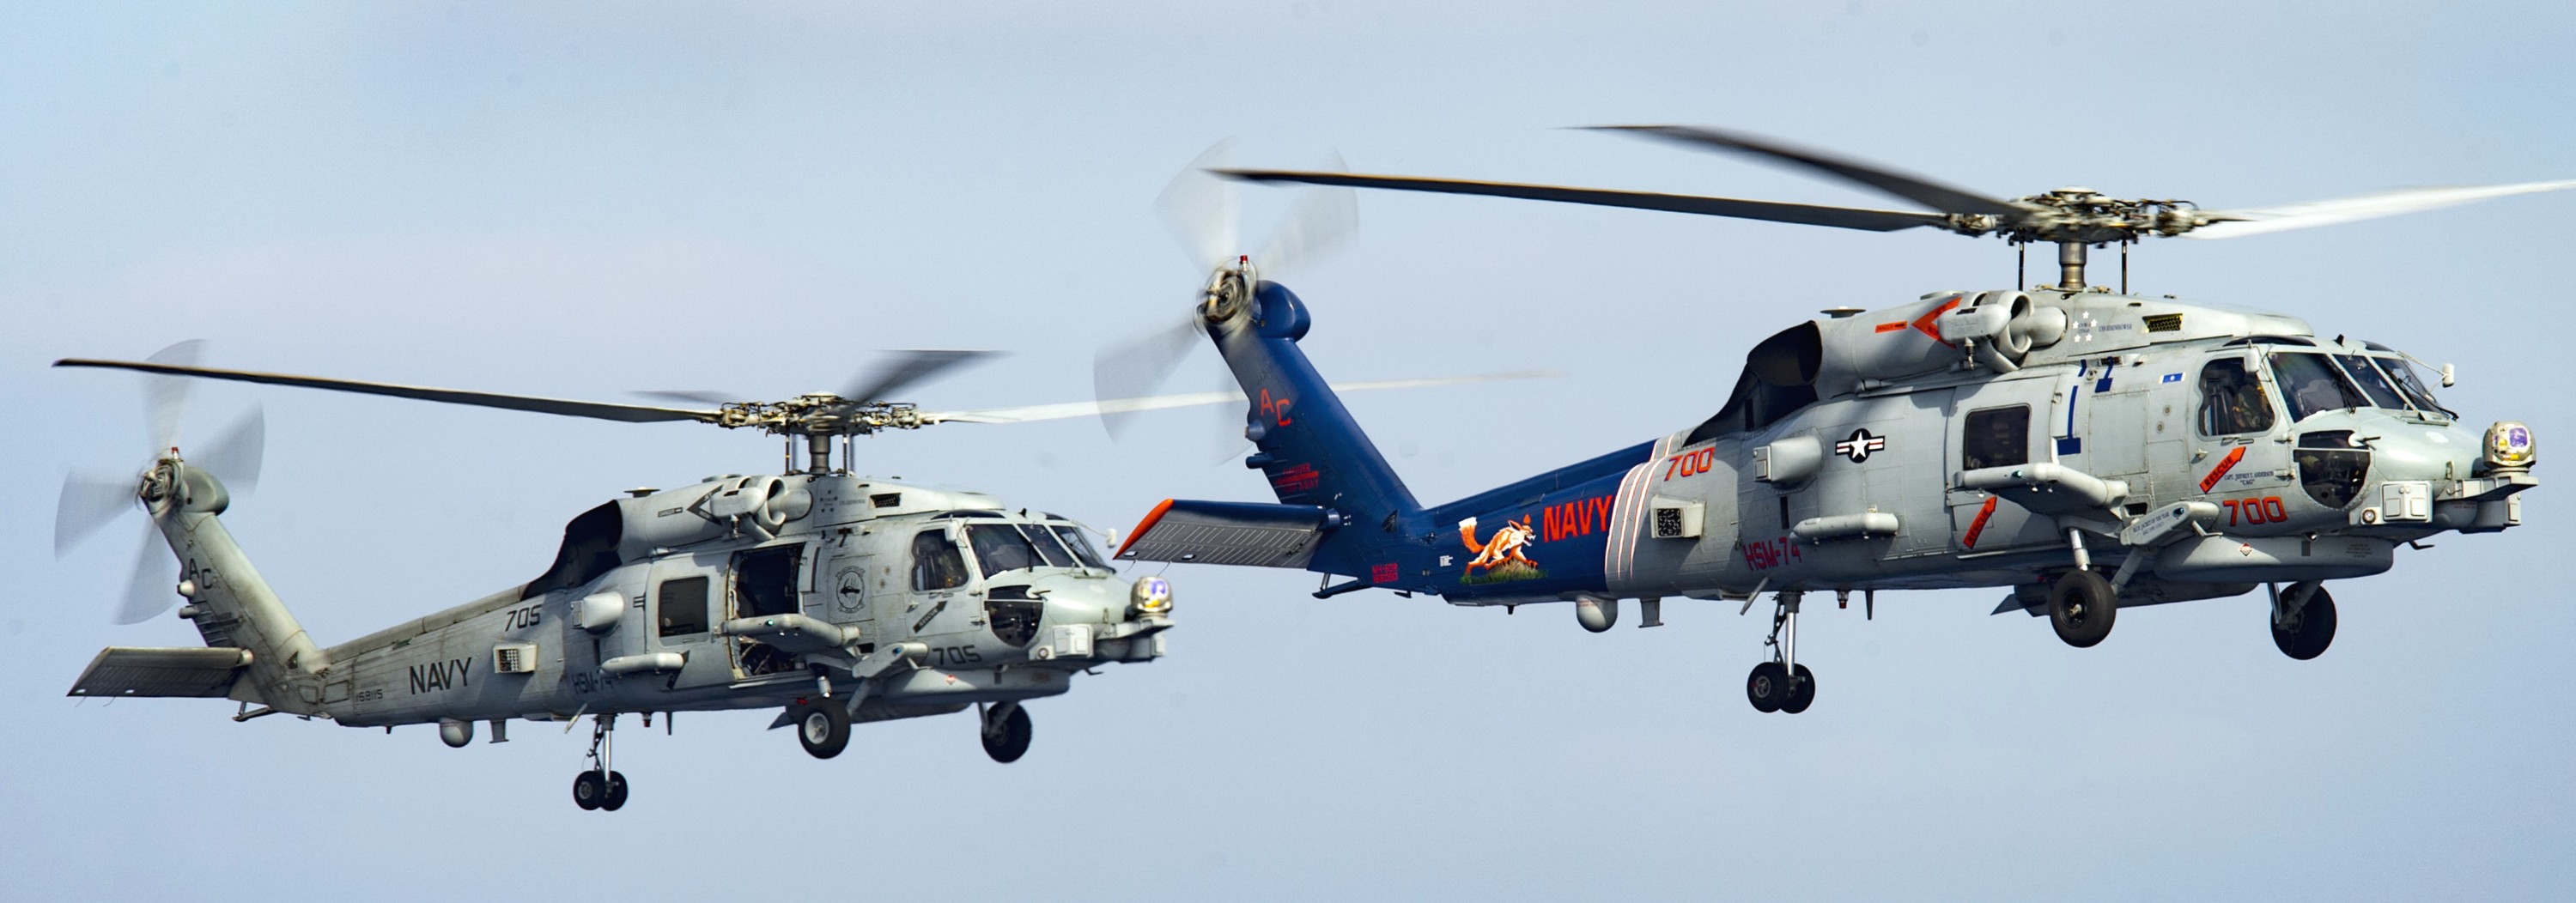 hsm-74 swamp foxes helicopter maritime strike squadron mh-60r seahawk cvw-3 cvn-69 uss dwight d. eisenhower 47